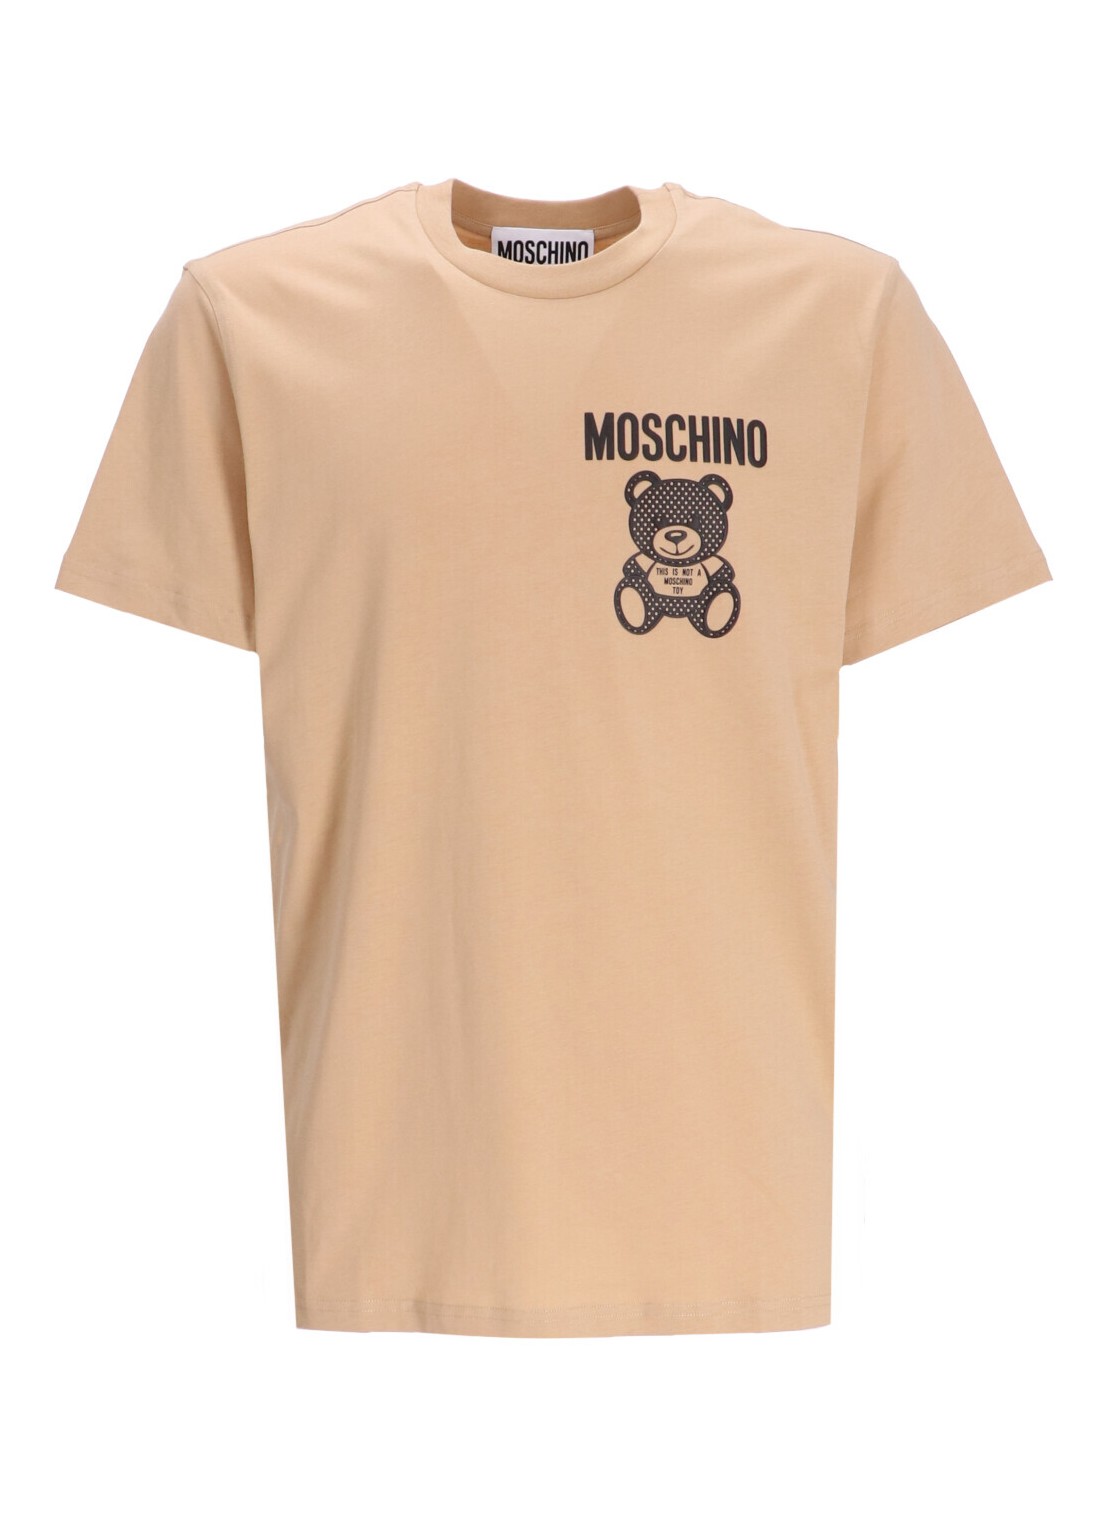 Camiseta moschino couture t-shirt man t-shirt 07292041 v1148 talla 50
 